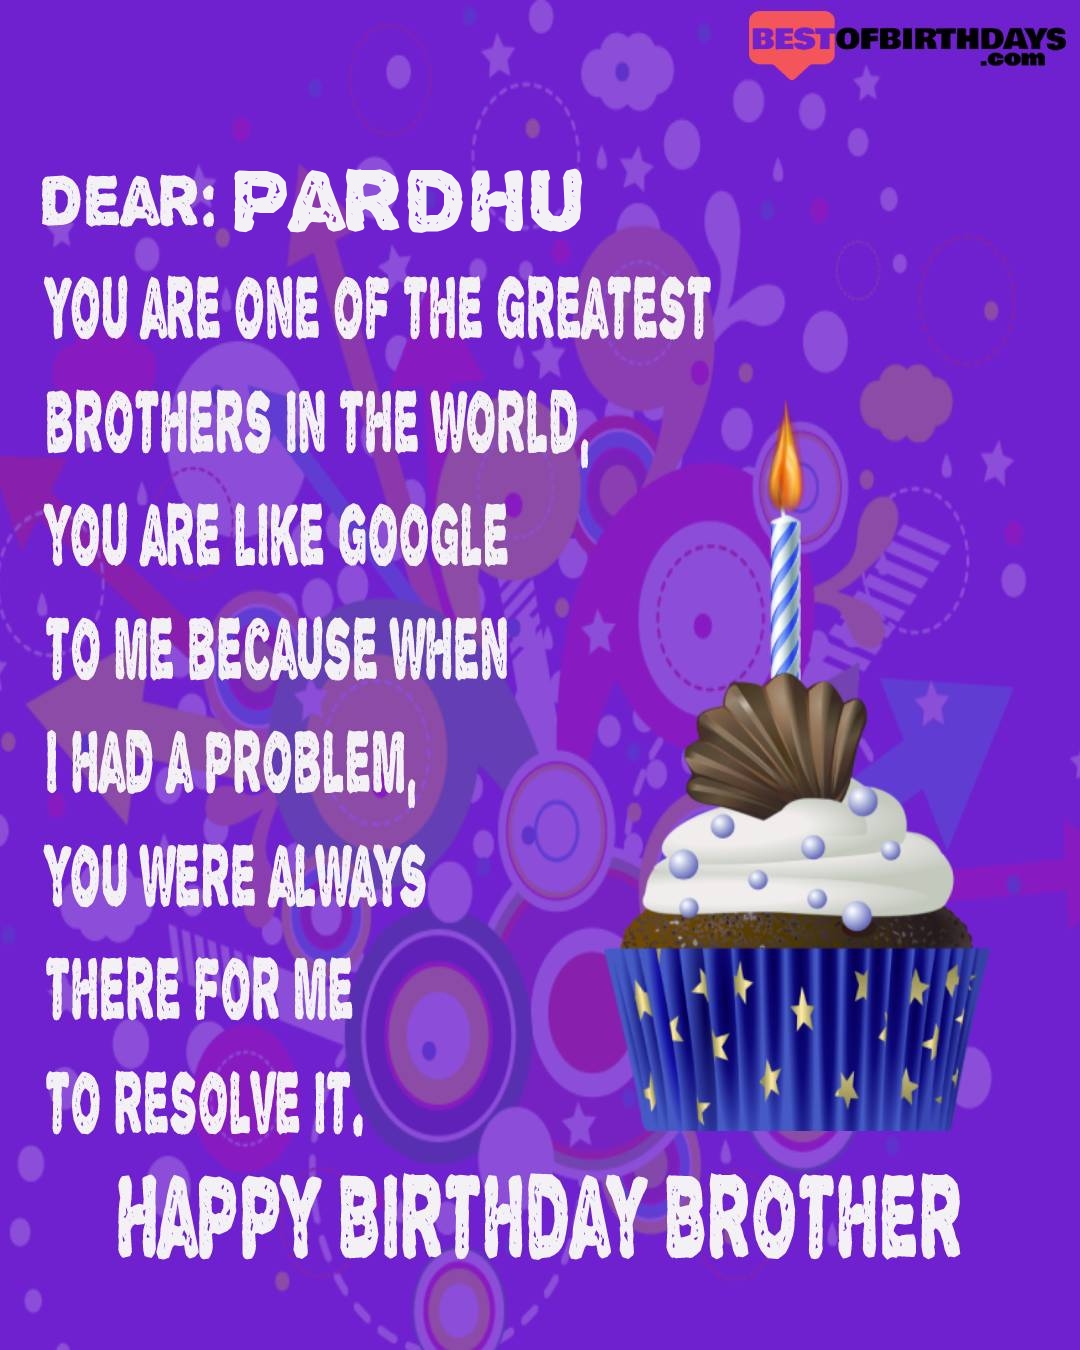 Happy birthday pardhu bhai brother bro